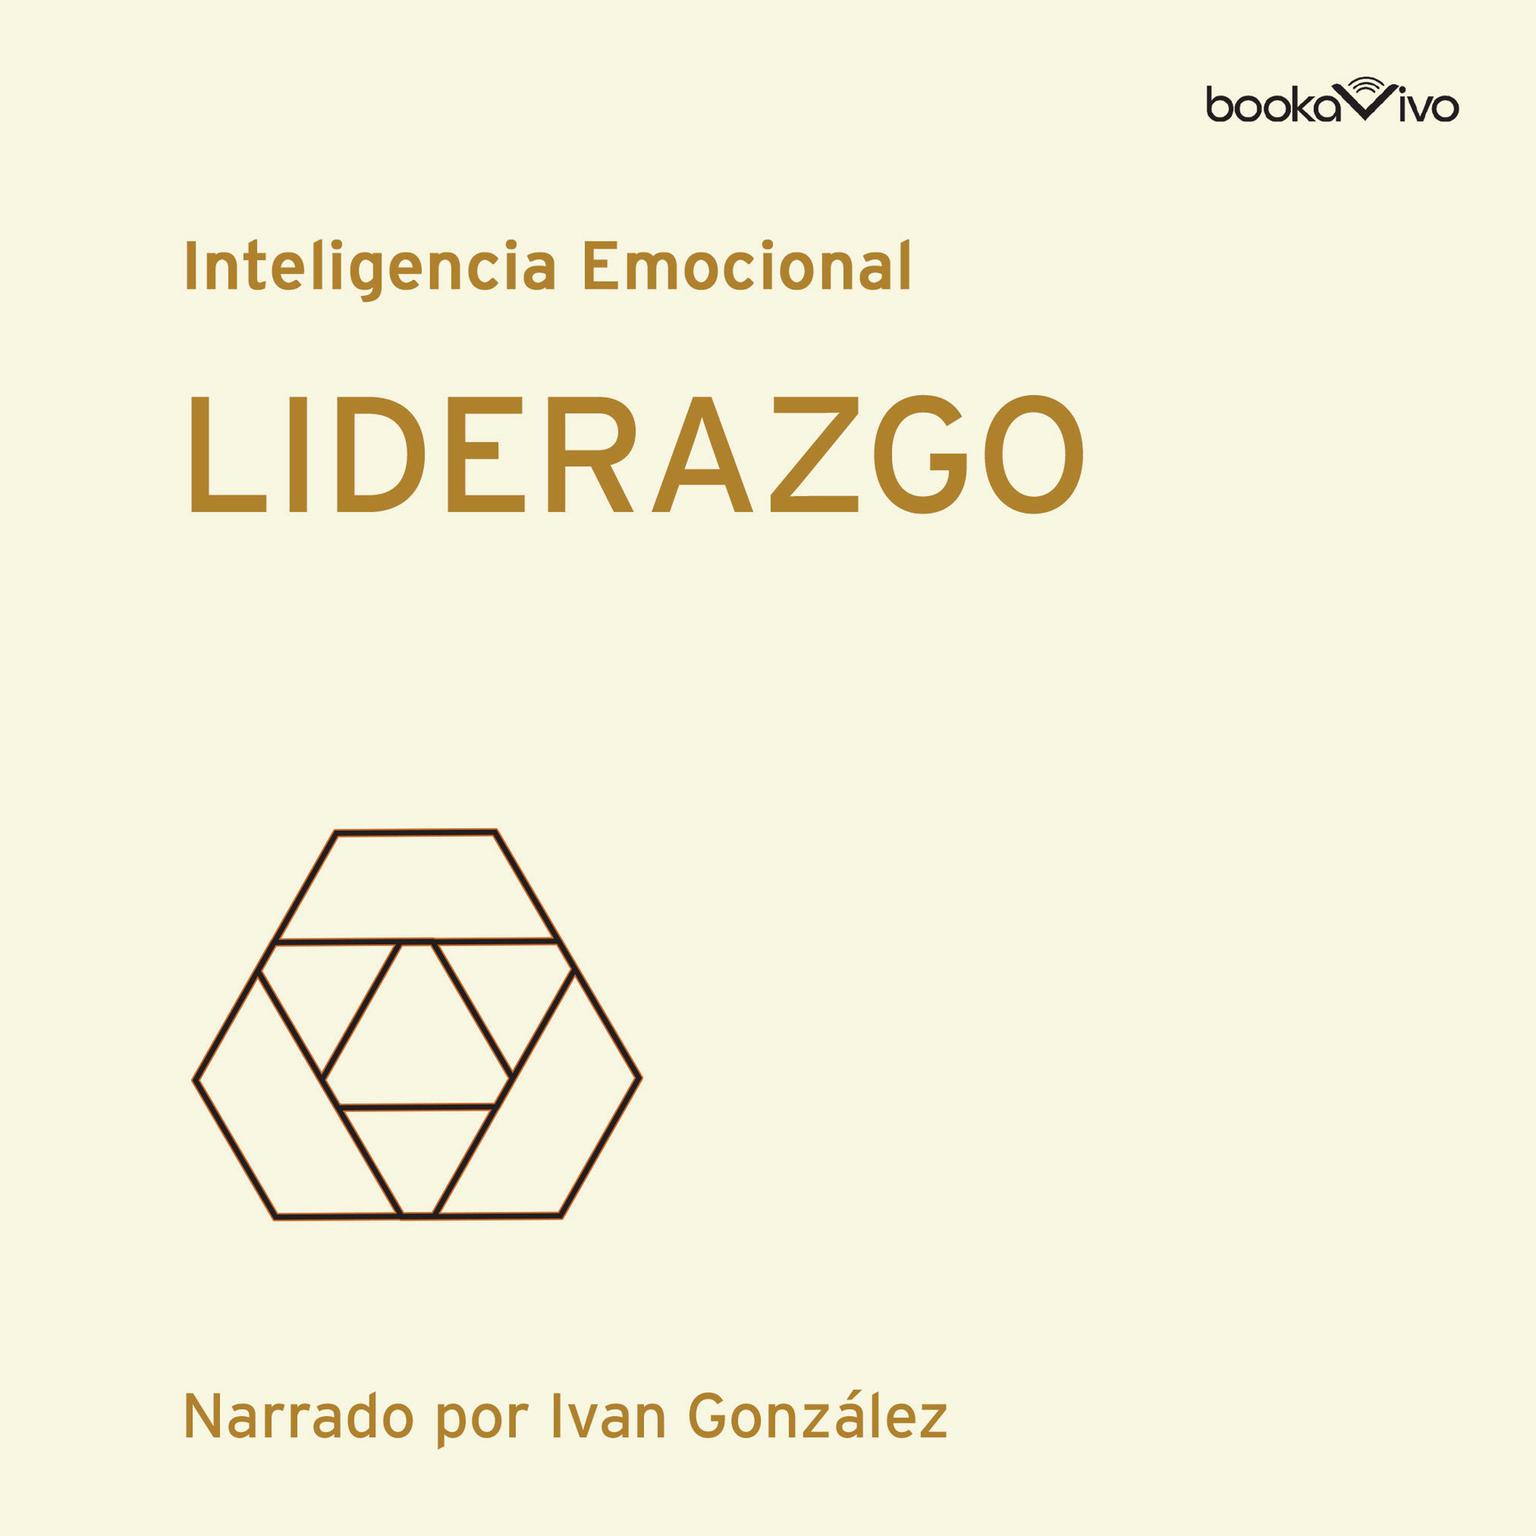 Liderazgo (Leadership Presence) Audiobook, by Deborah Tannen